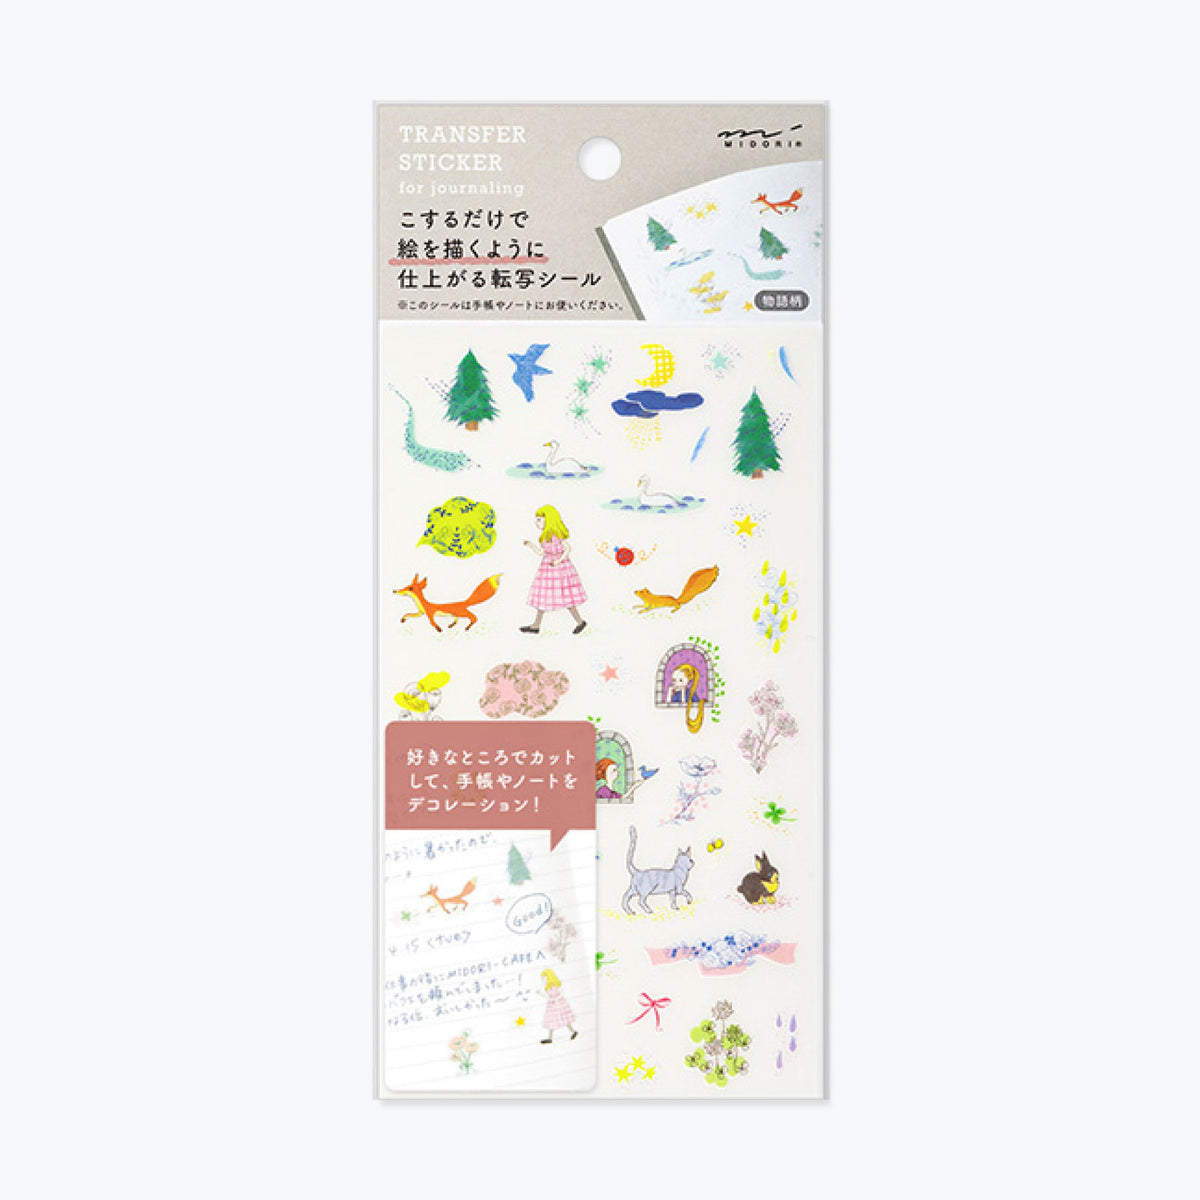 Midori - Sticker Seal - Transfer - Fairytale